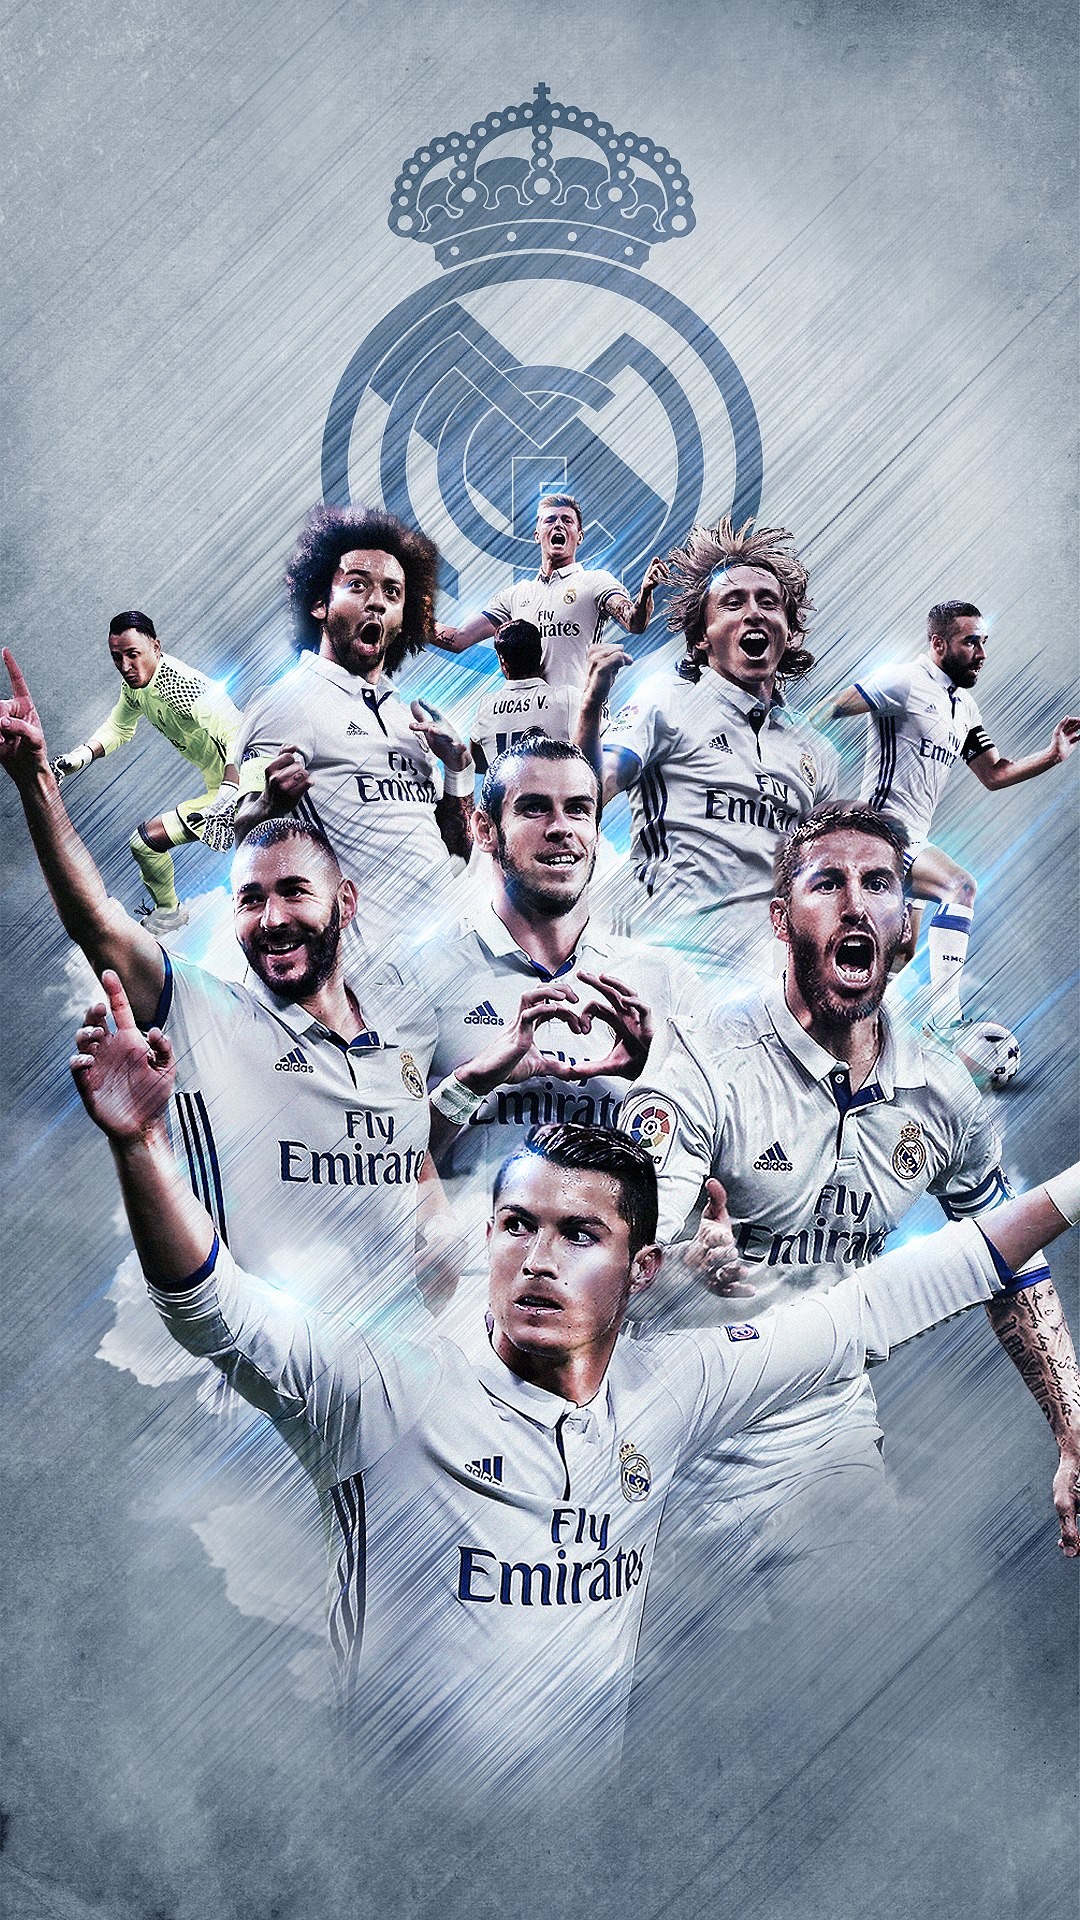 Real Madrid Wallpaper Full HD Image